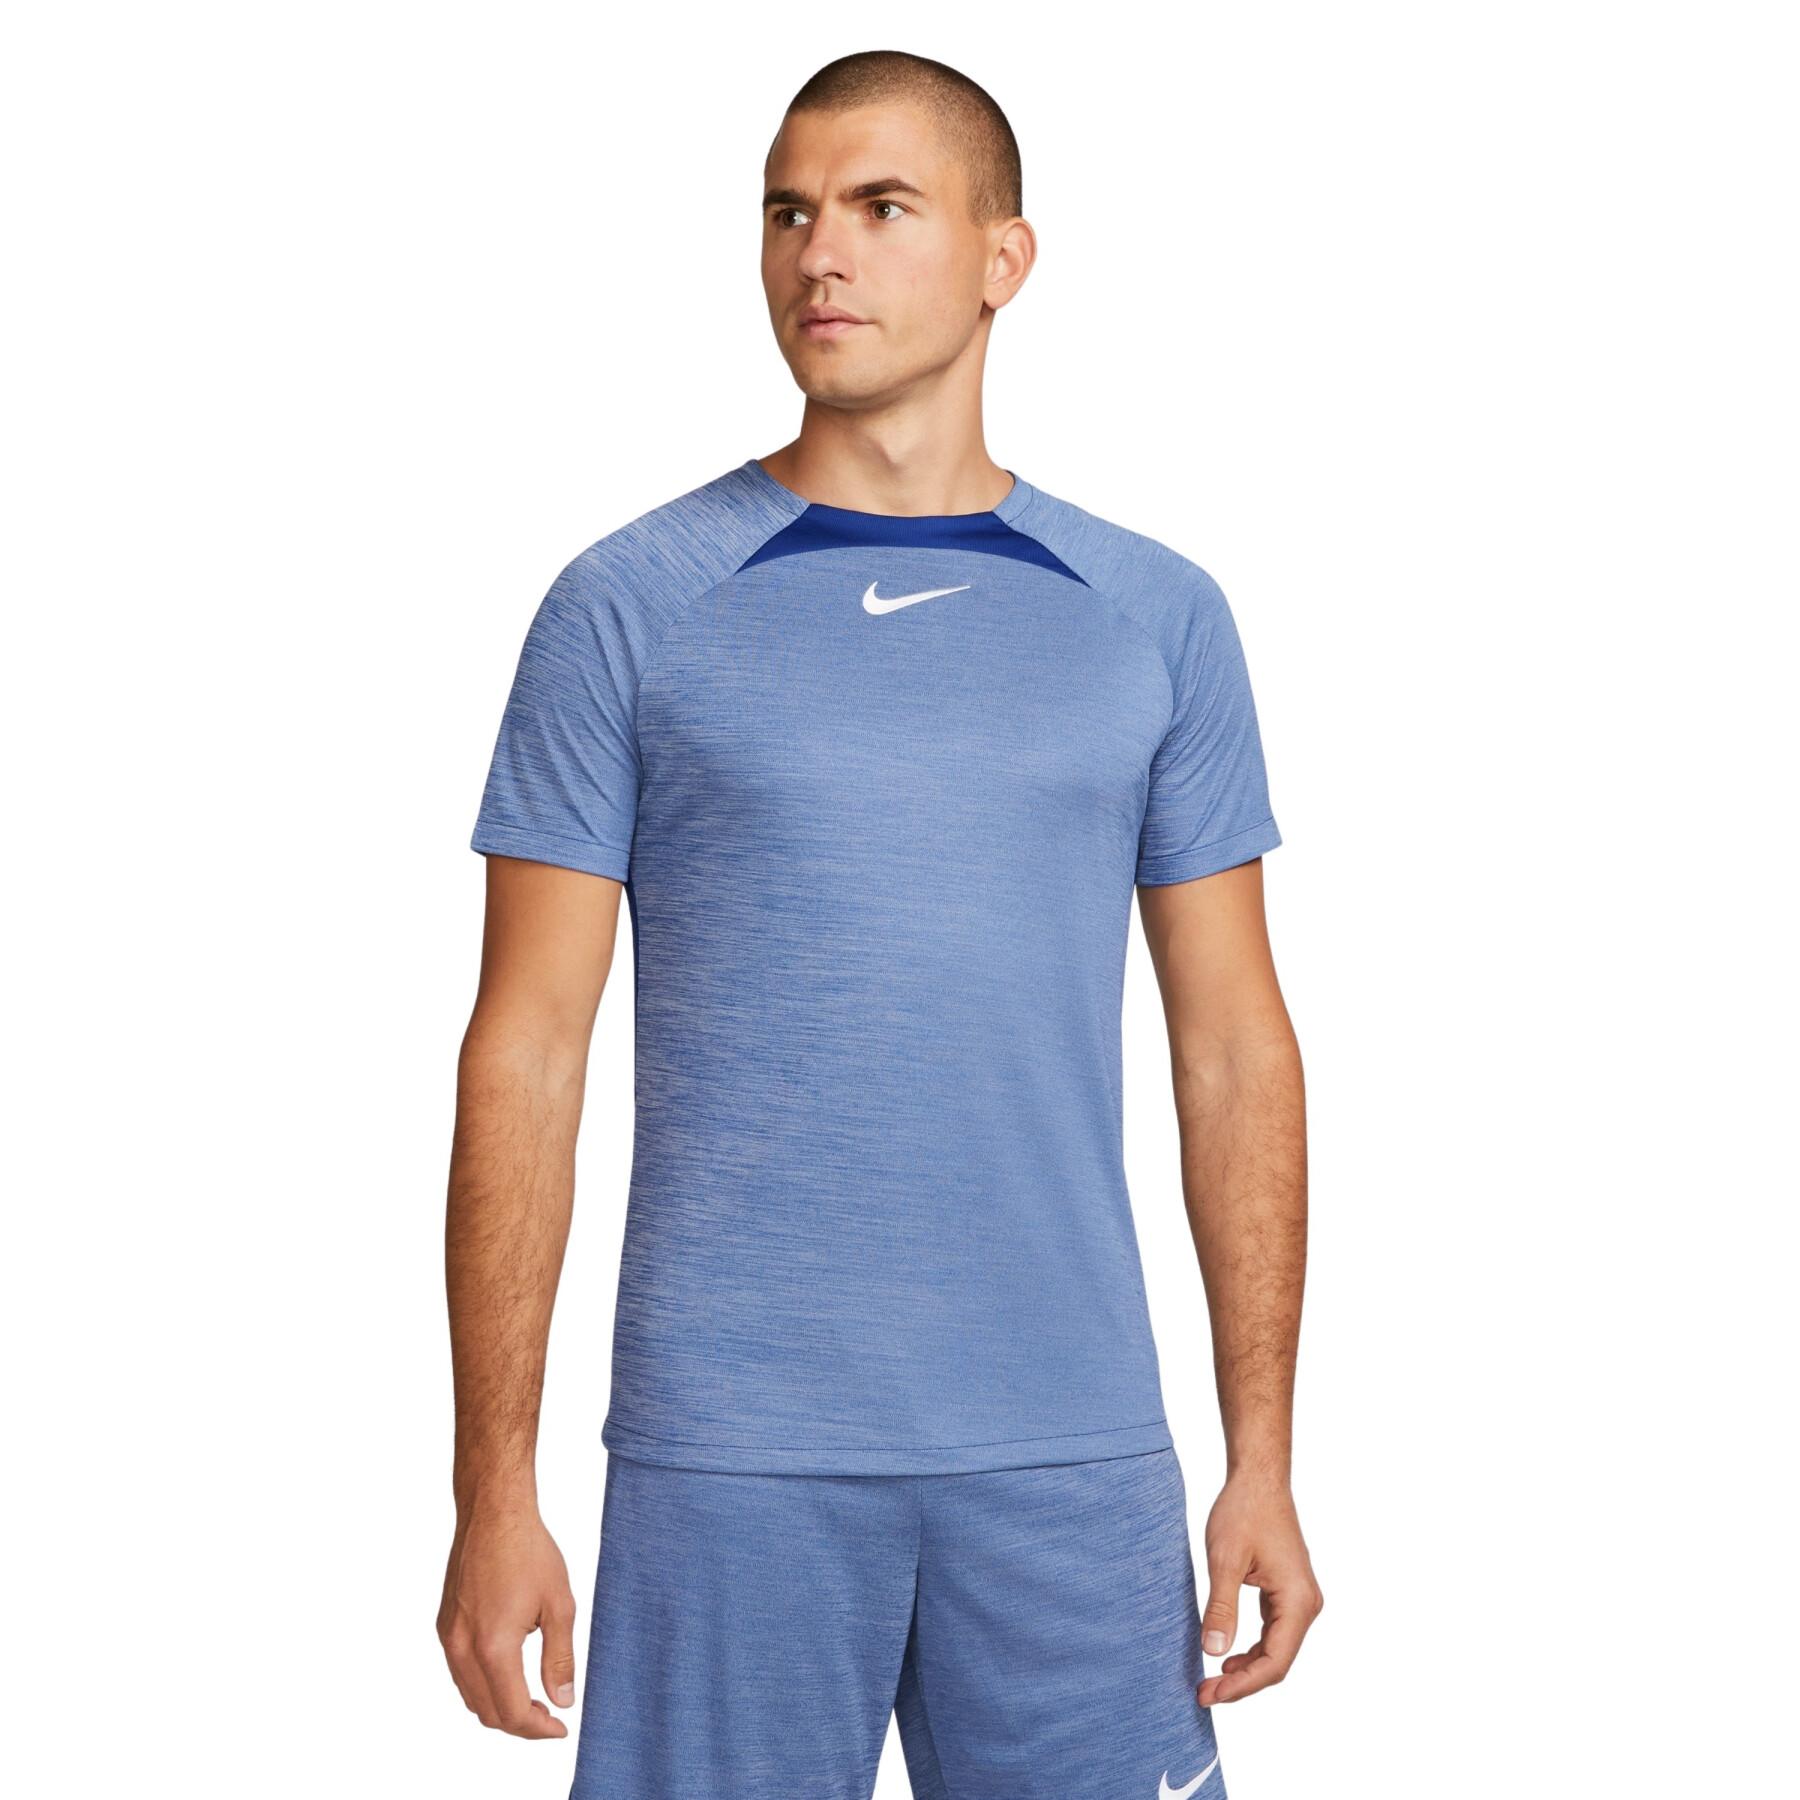 Maillot entraînement Nike Academy bleu blanc